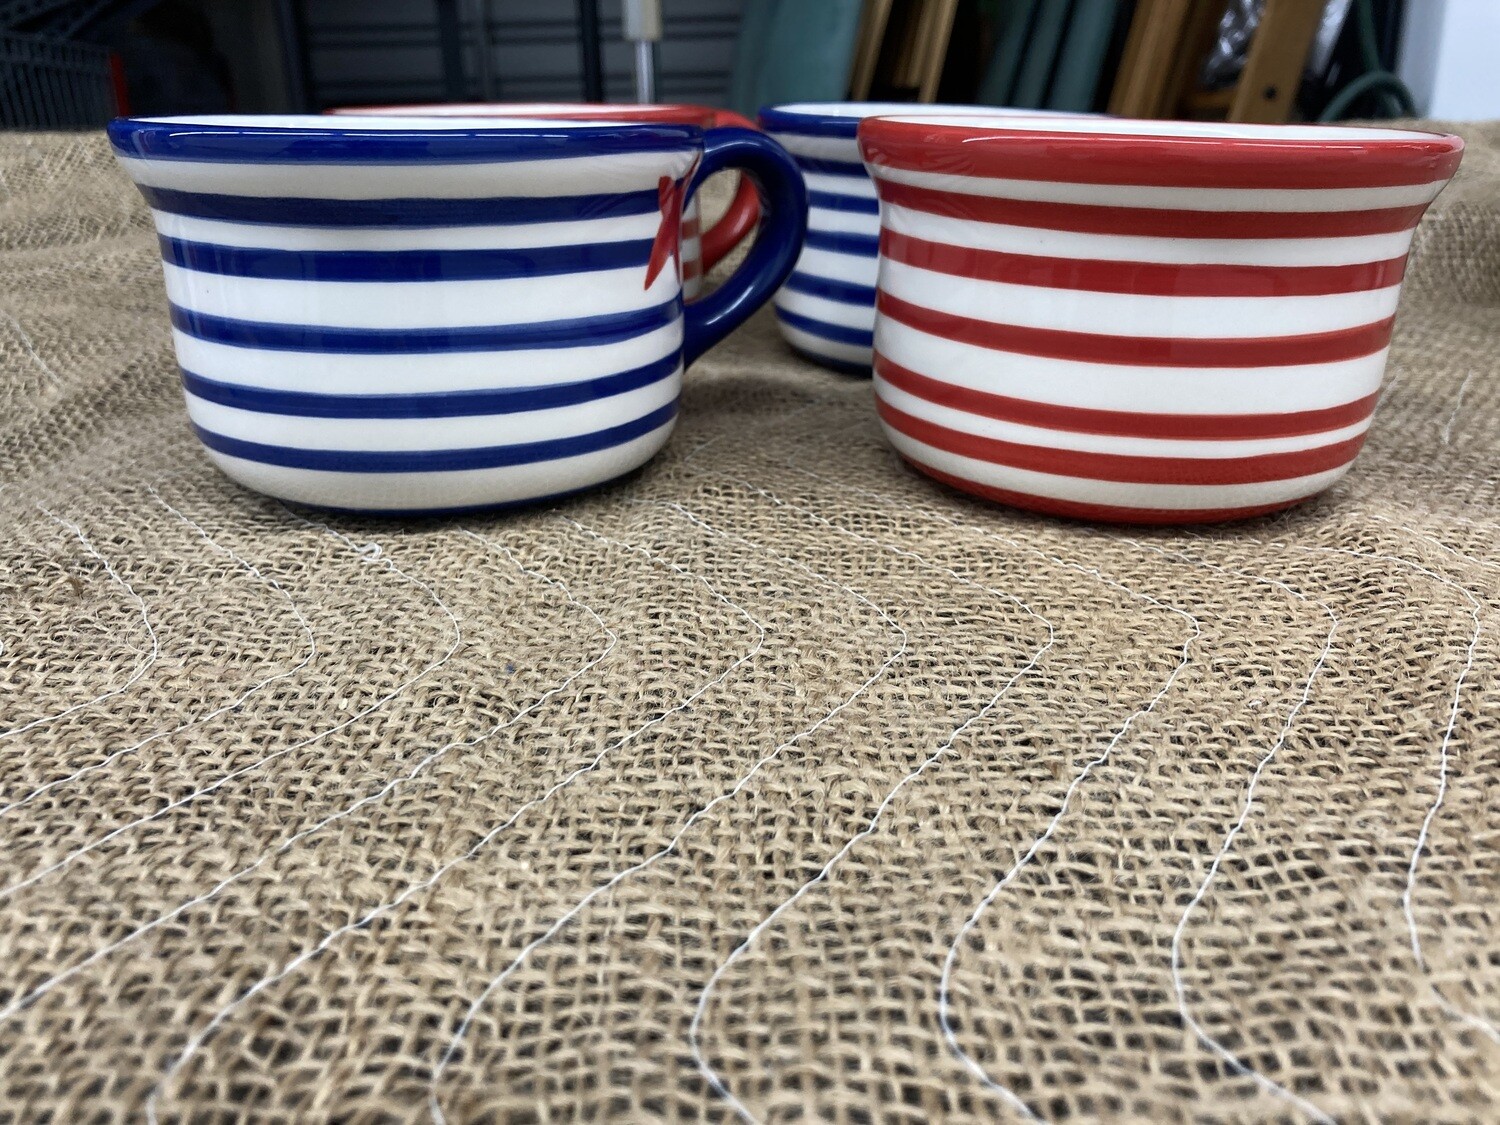 Set of 4 Mesa Red, White, Blue Soup Mugs #2314